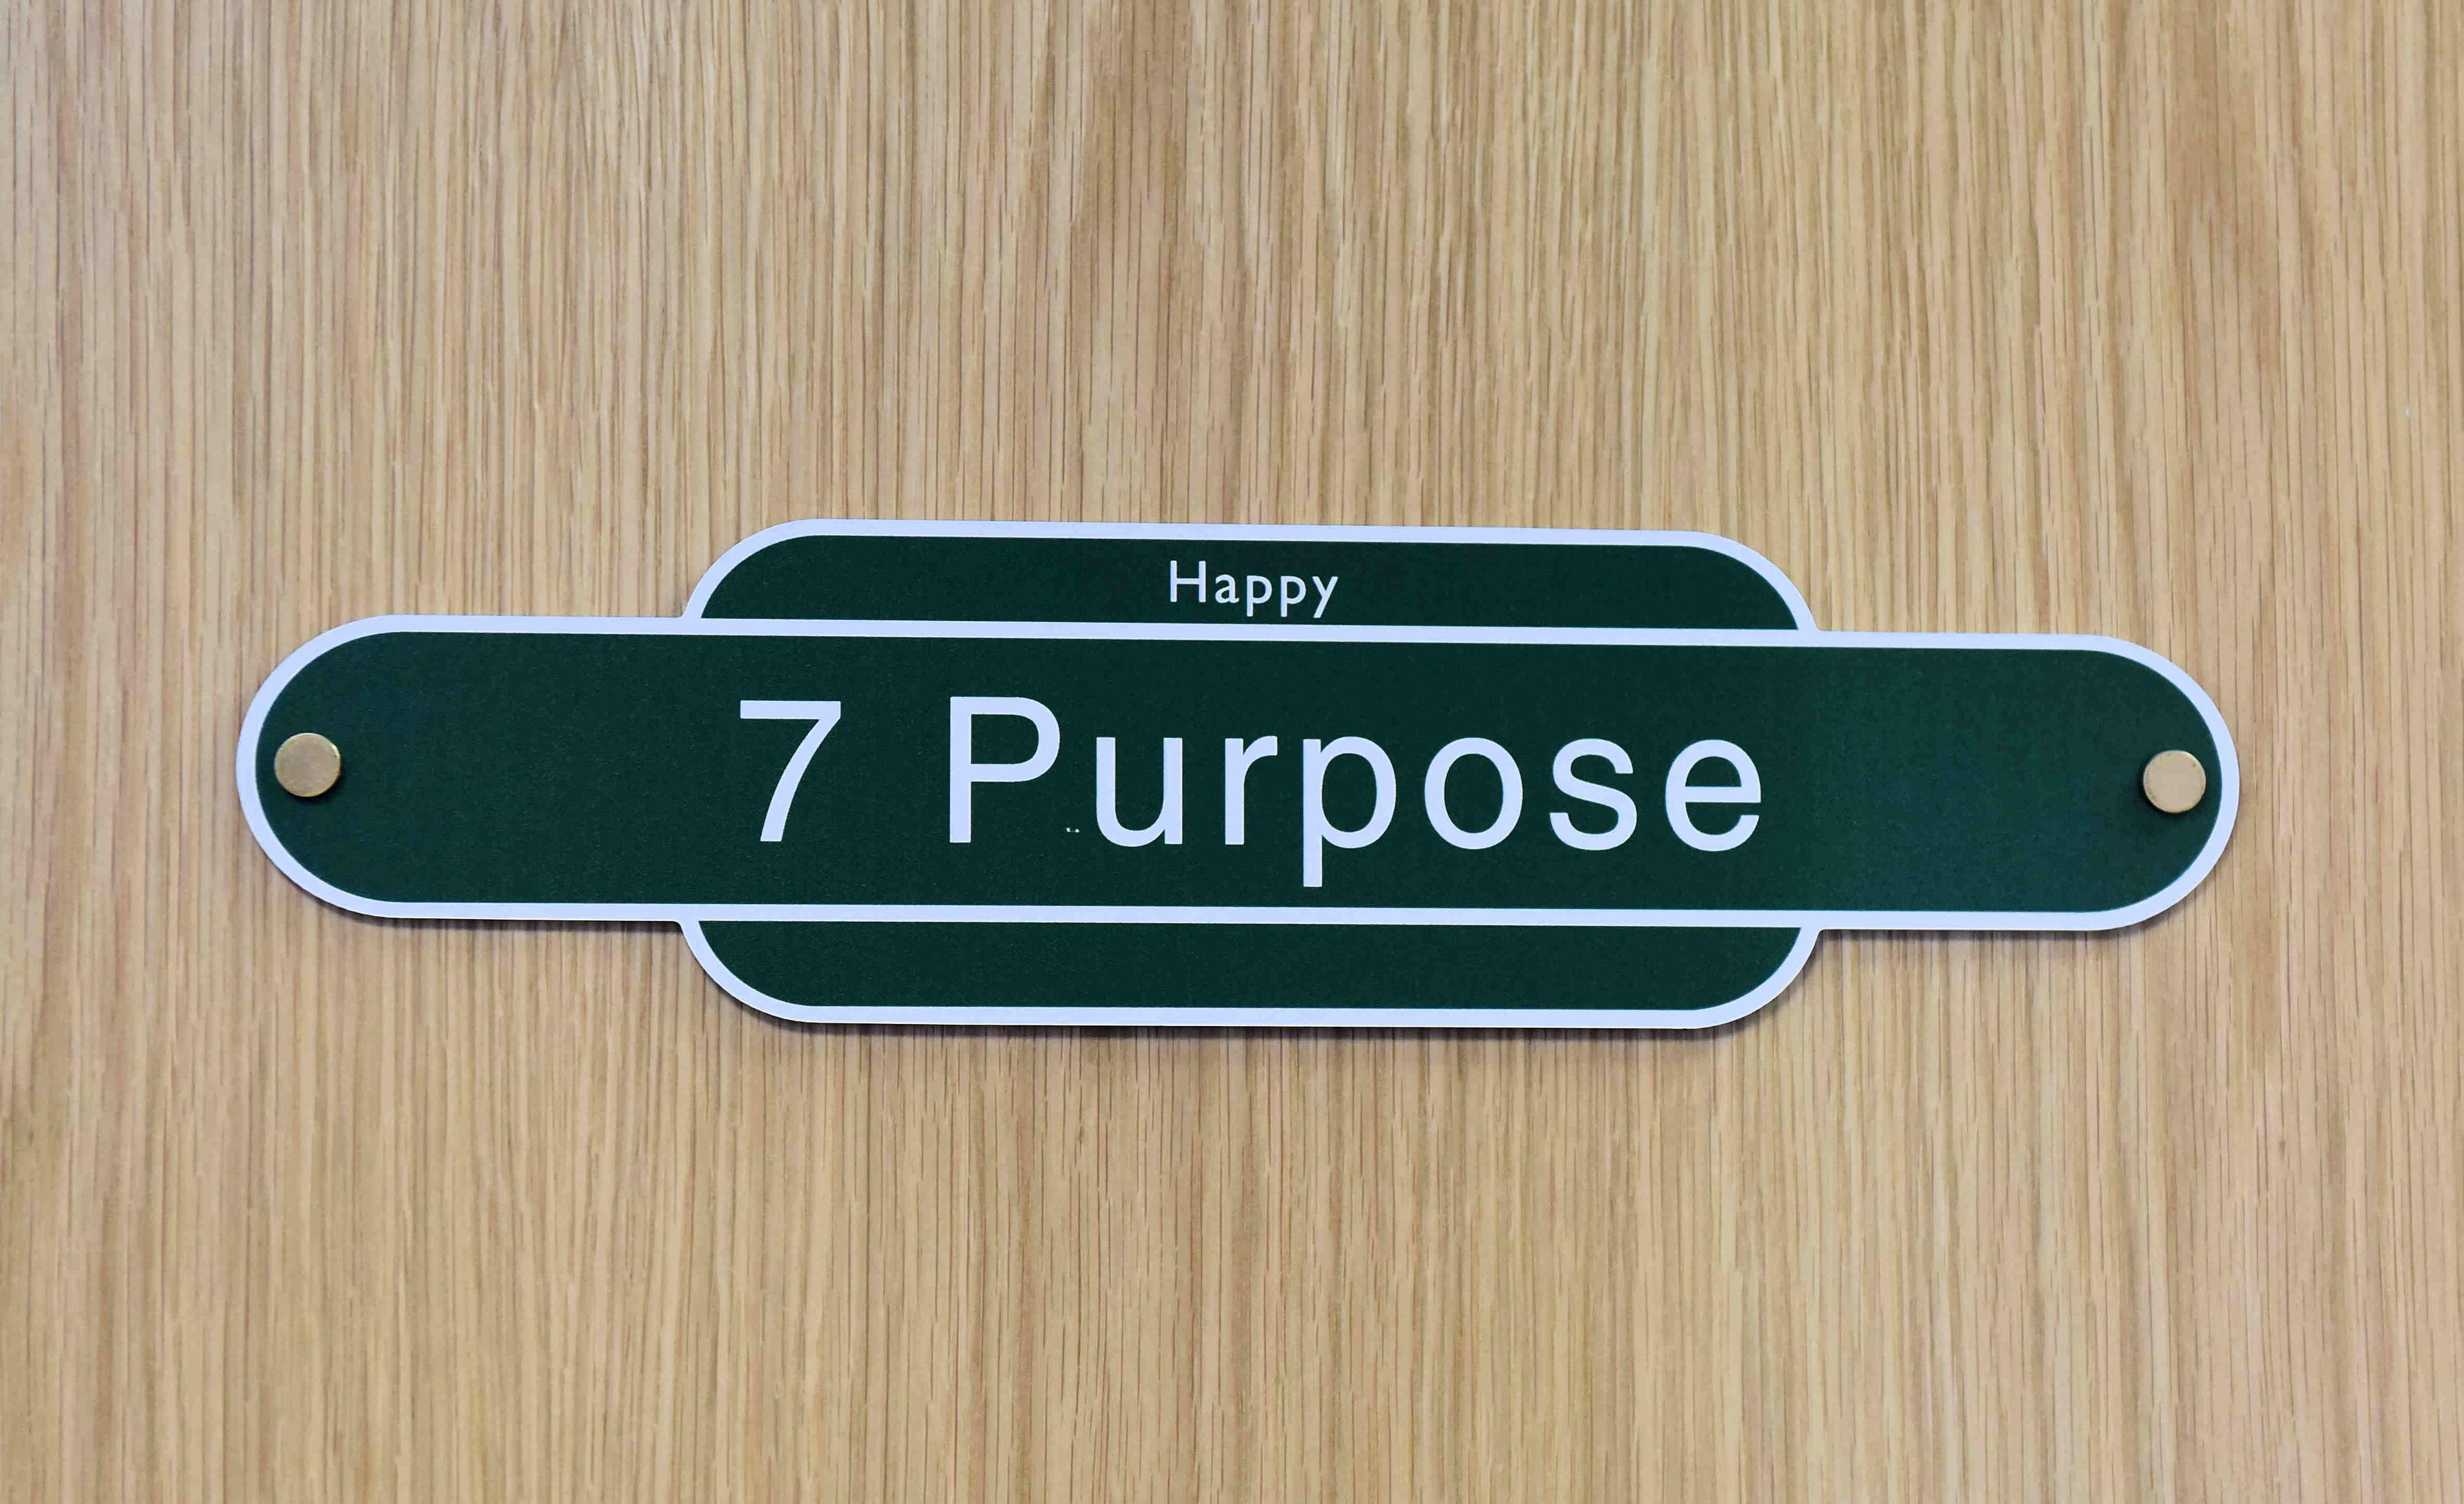 Happy Computers Ltd, Room 7, 'Purpose' photo #1